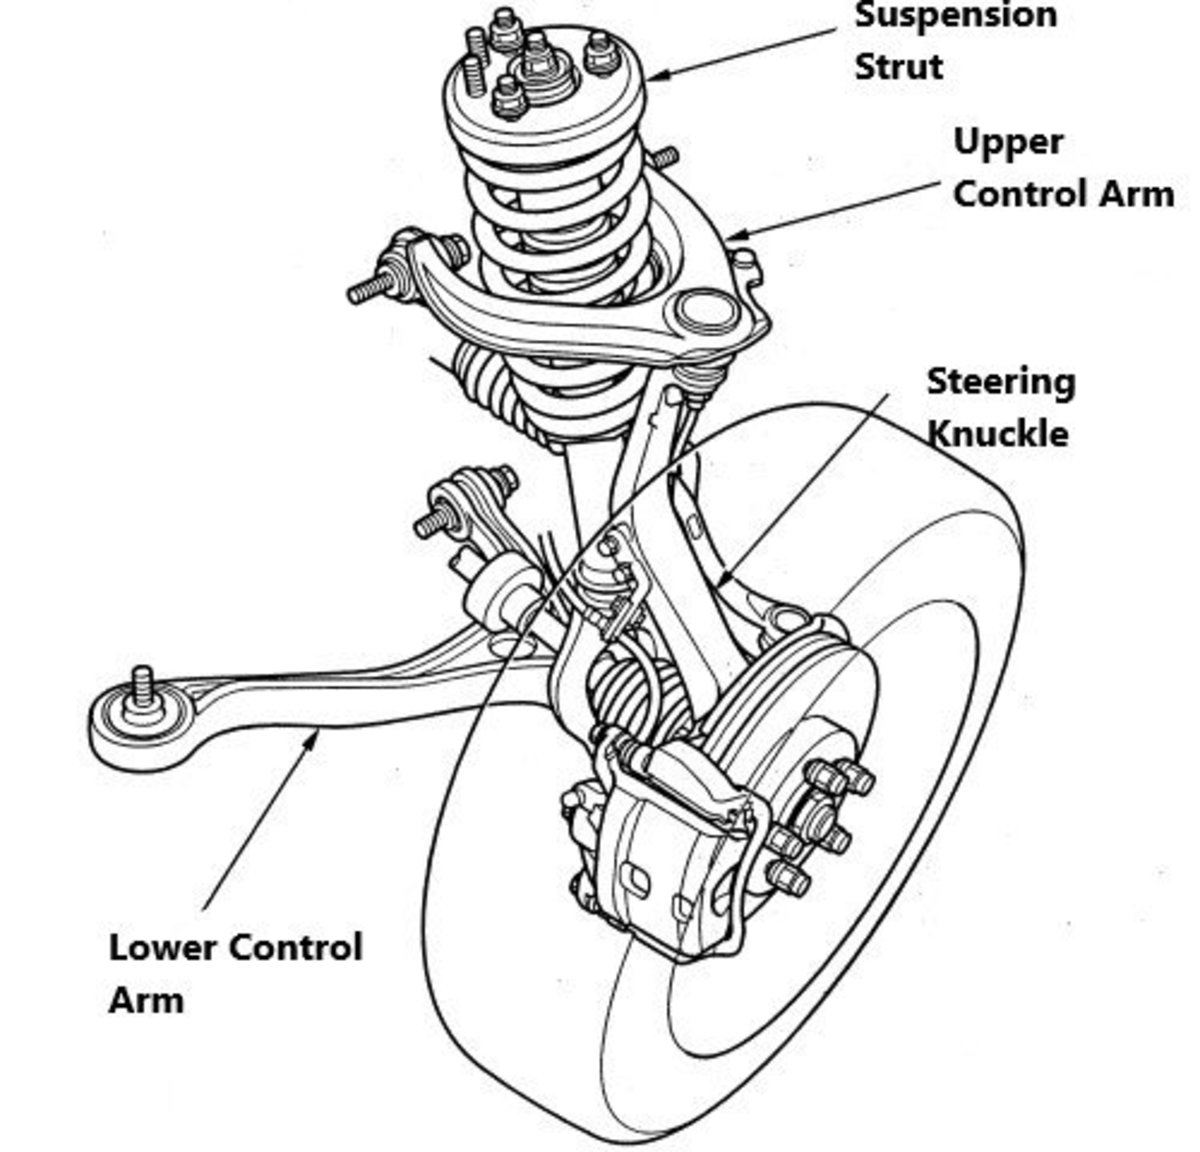 Typical Honda front suspension diagram